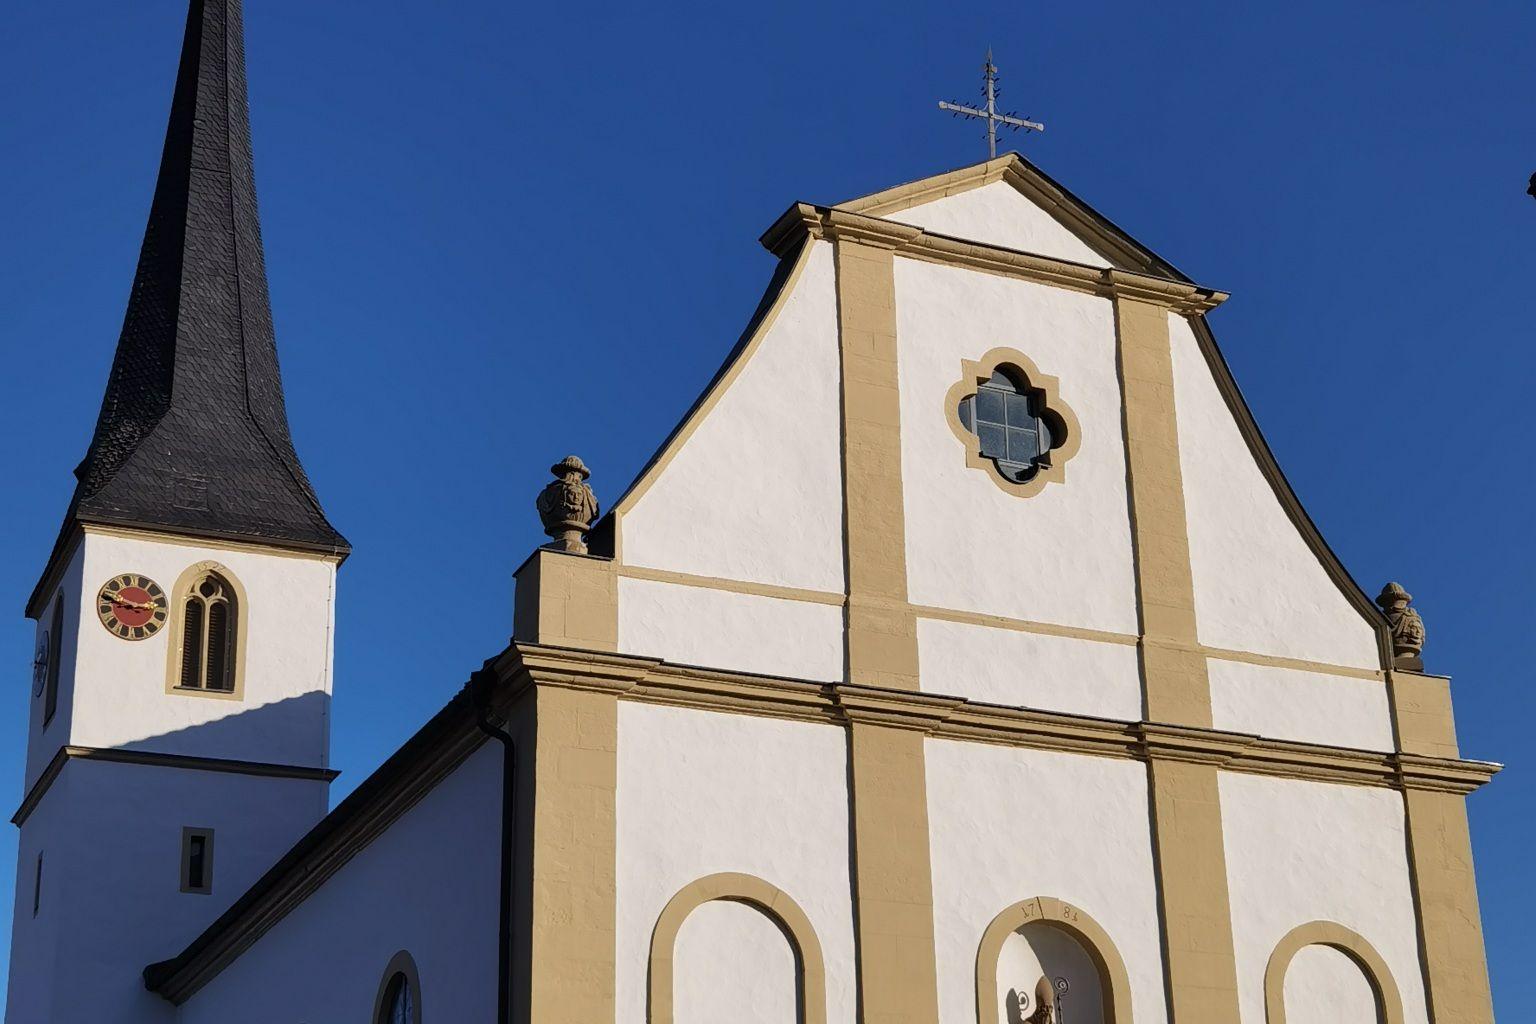 Rodheim Kirche aussen